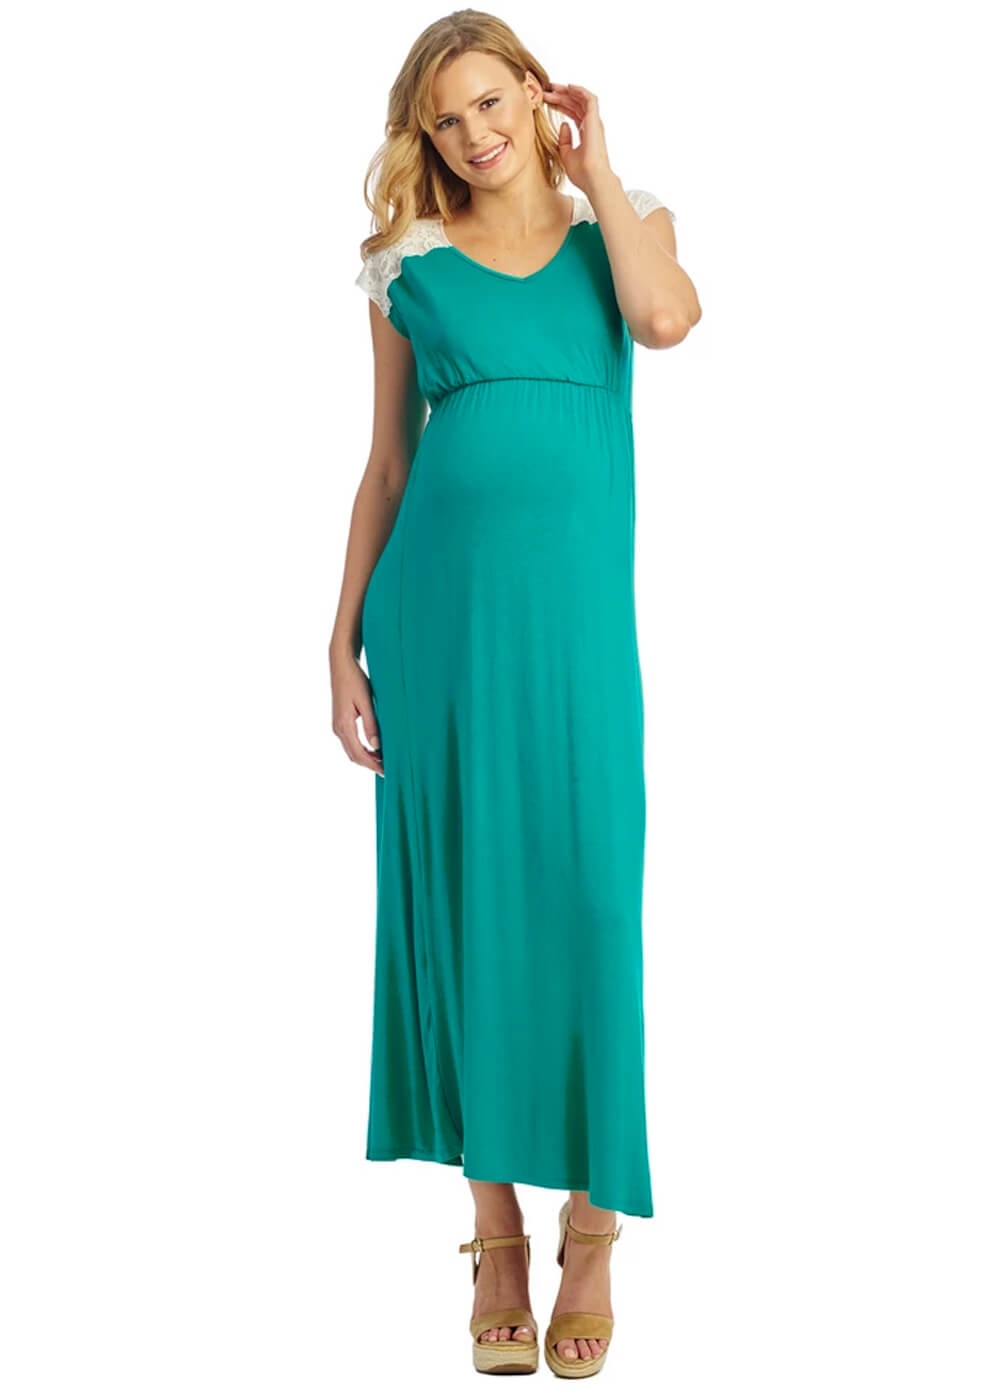 Everly Grey - Margaret Maternity Dress - Portofino Green | Queen Bee